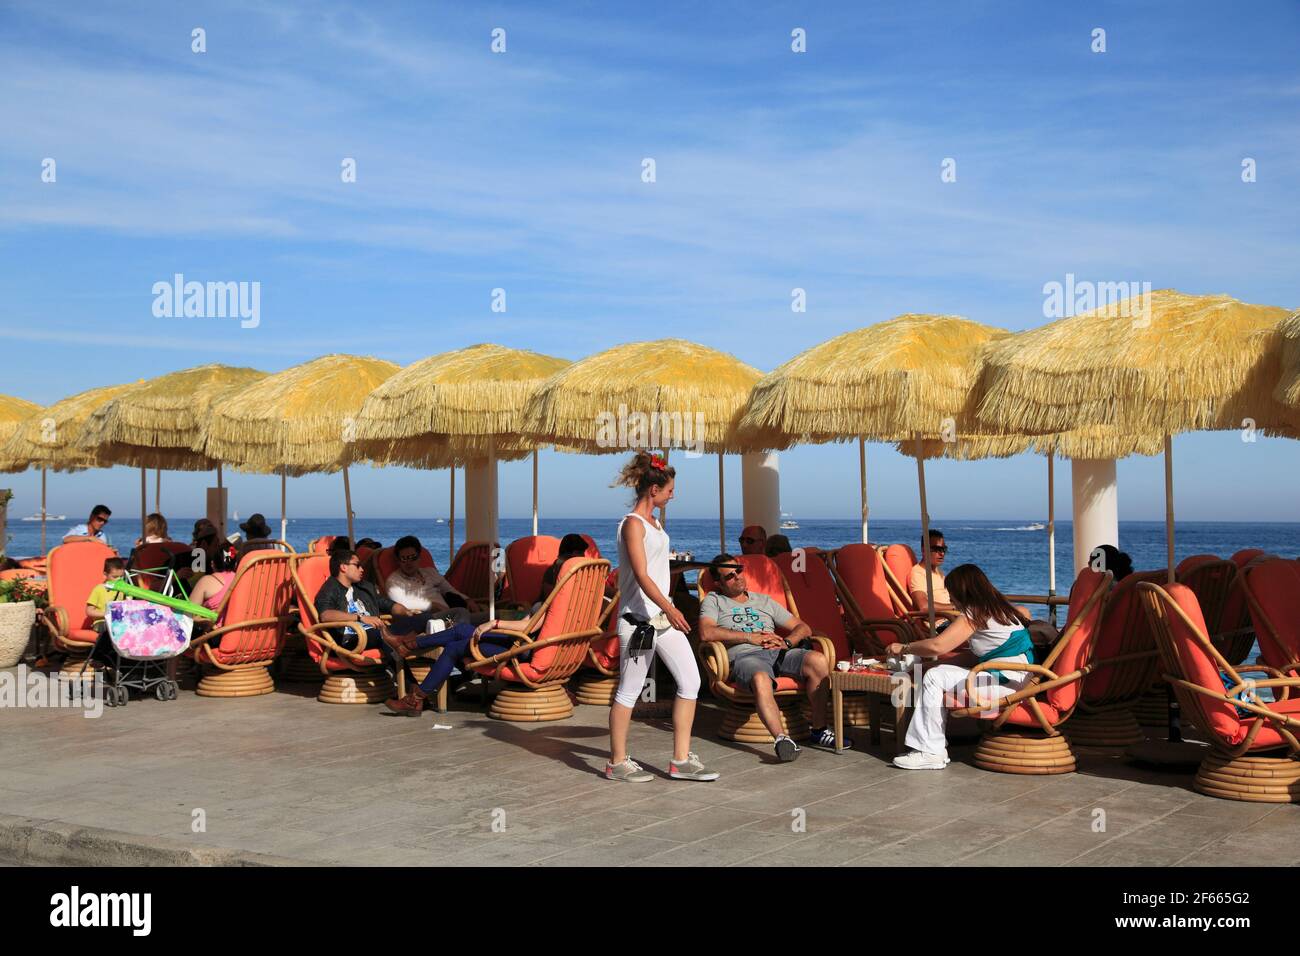 Promenade, Cafe, Menton, Cote d'Azur, French Riviera, Alpes-Maritimes, Provence, France, Europe Stock Photo